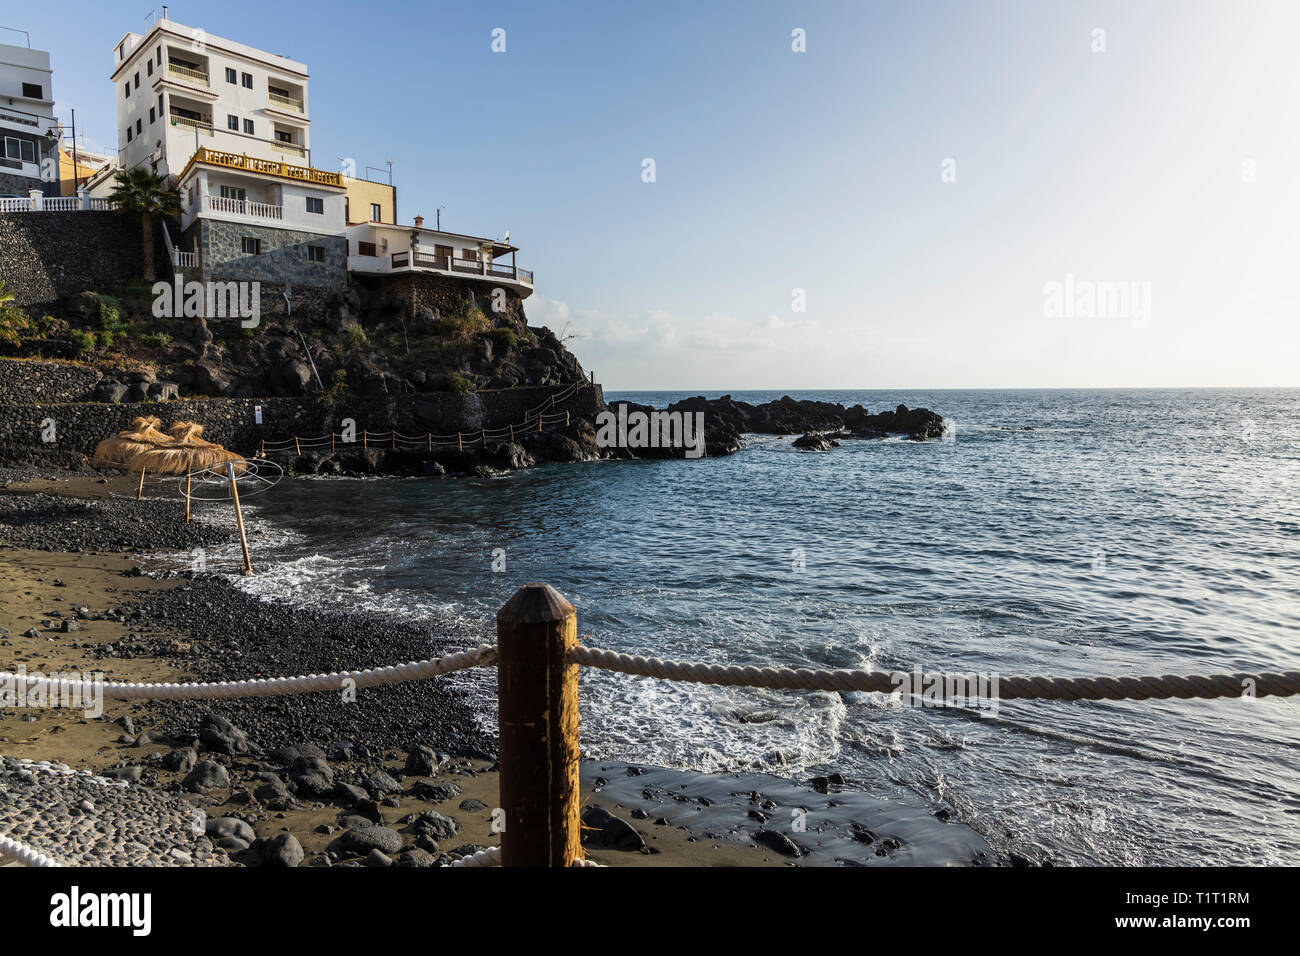 Village of Puerto Santiago above the small stony beach of Playa Chica, Puerto de Santiago, Tenerife, Canary Islands, Spain Stock Photo